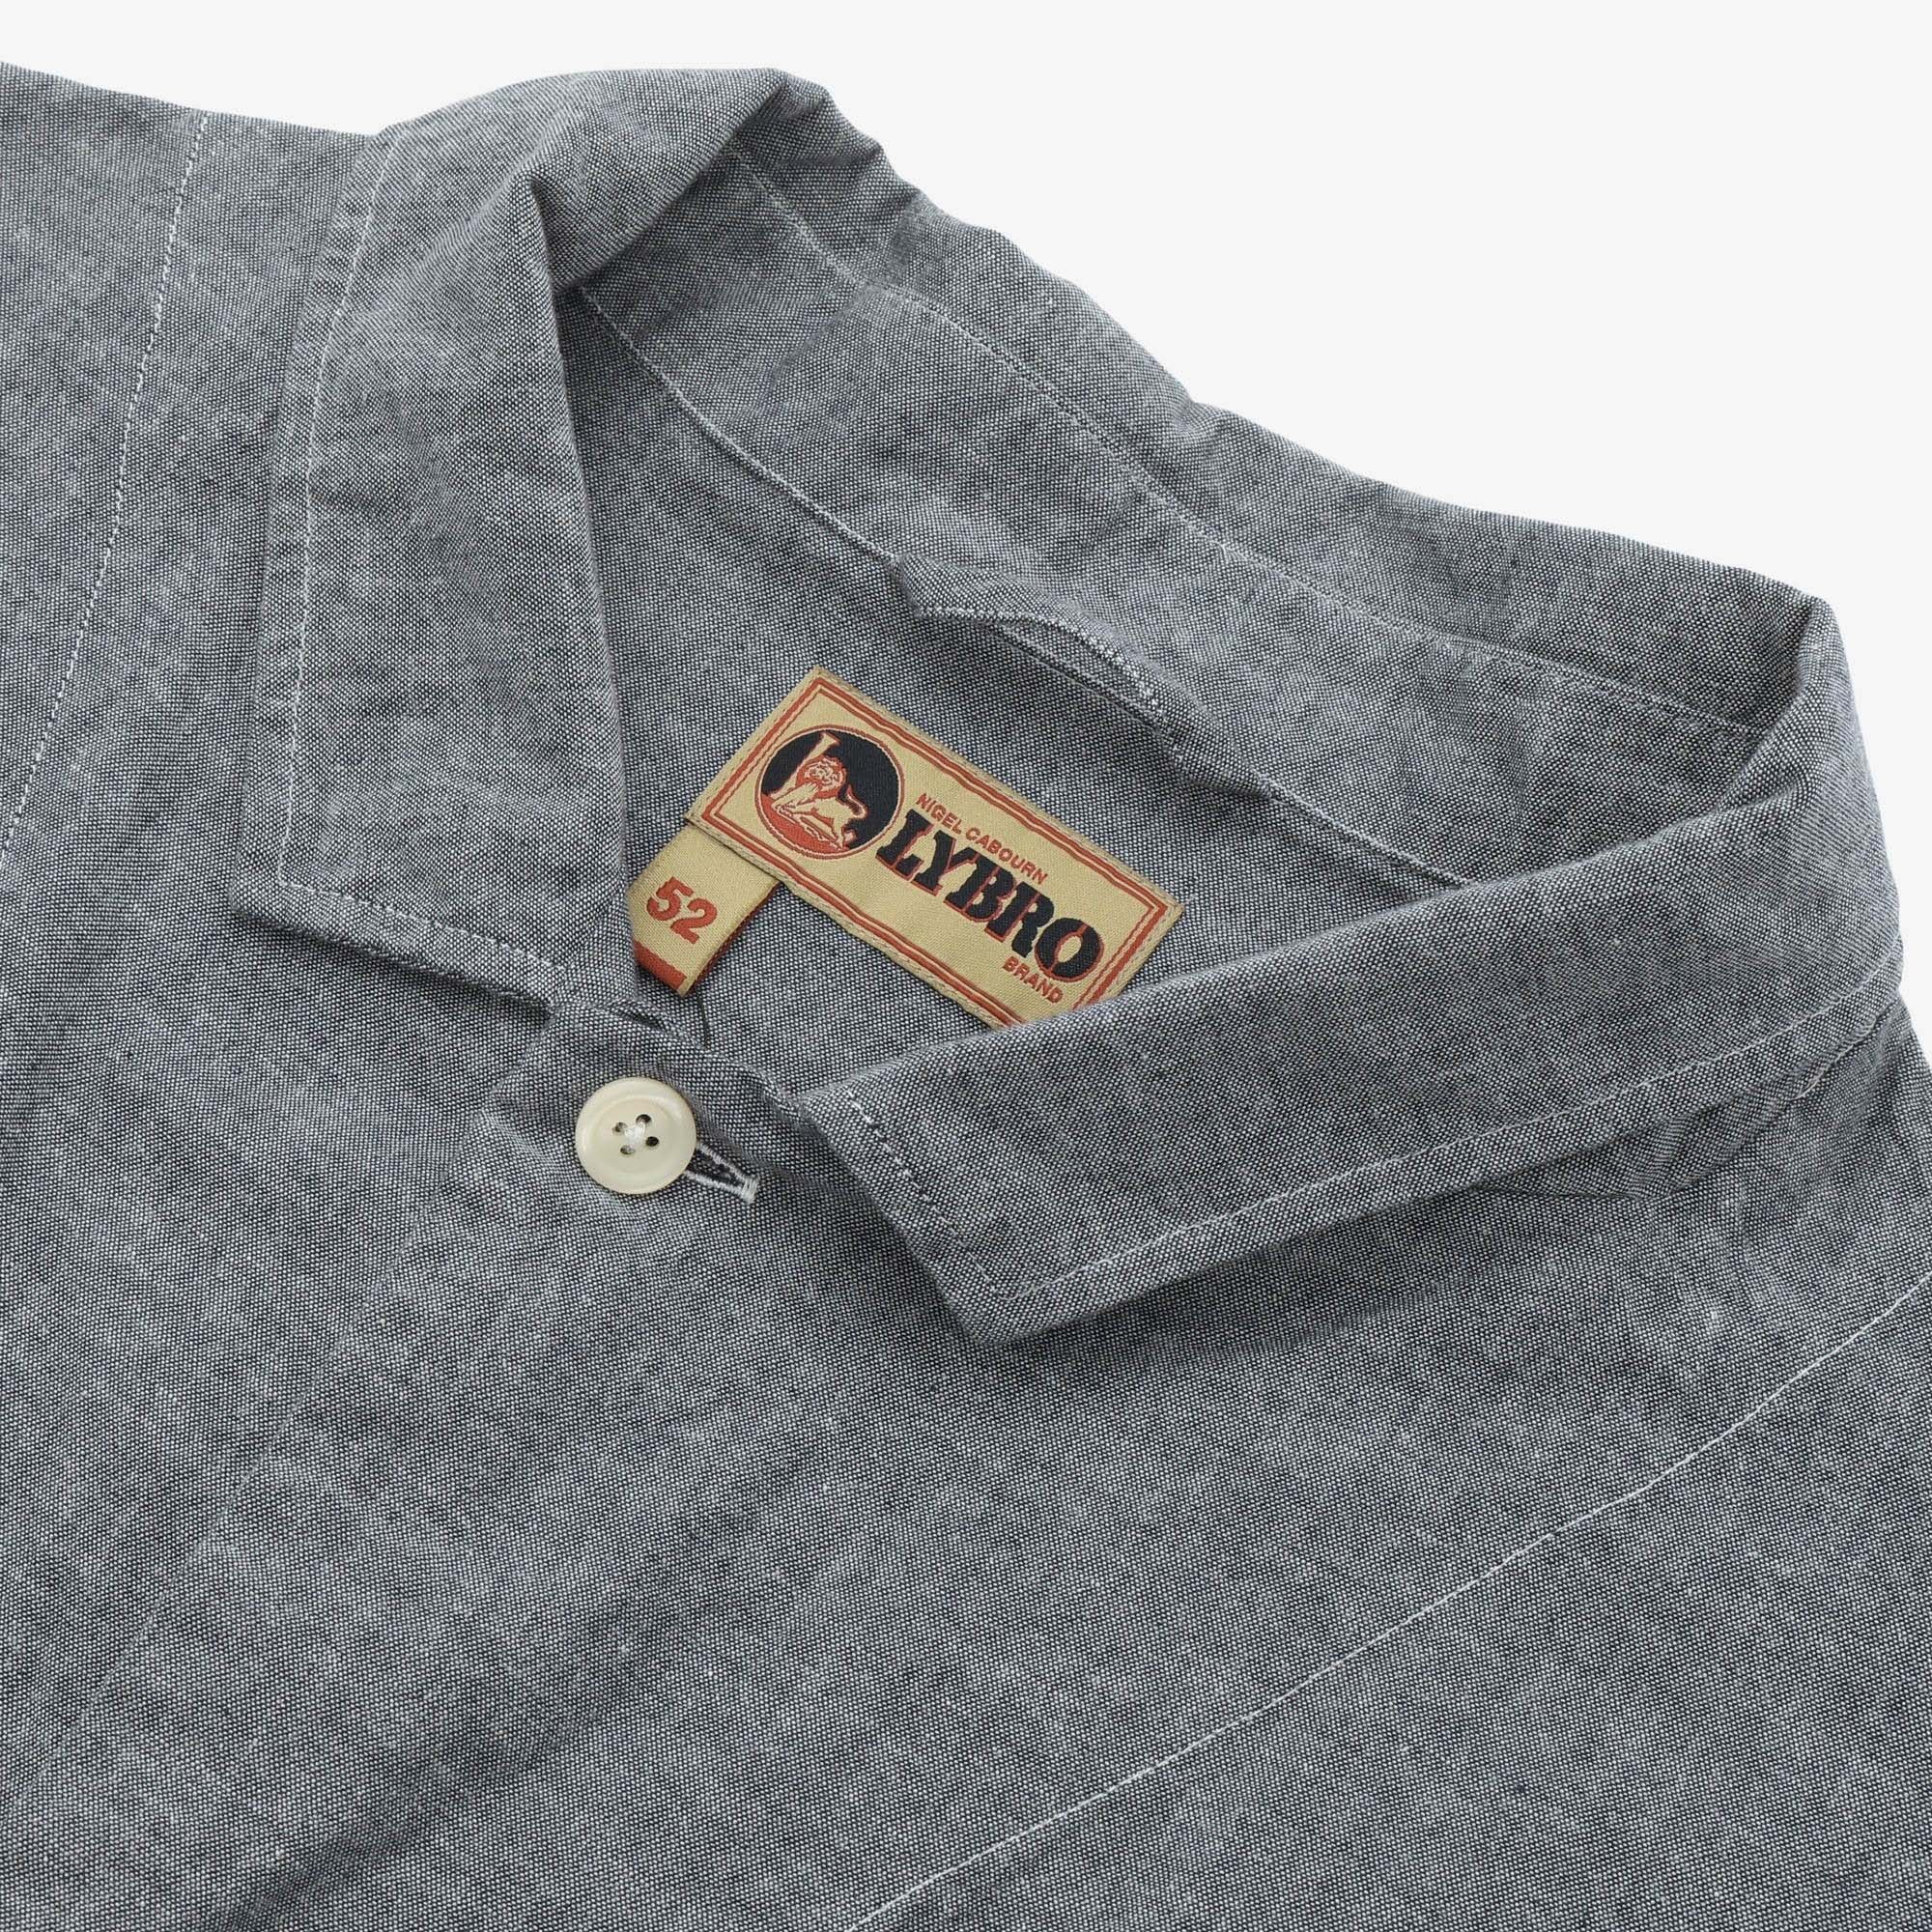 Lybro Long Pocket Shirt